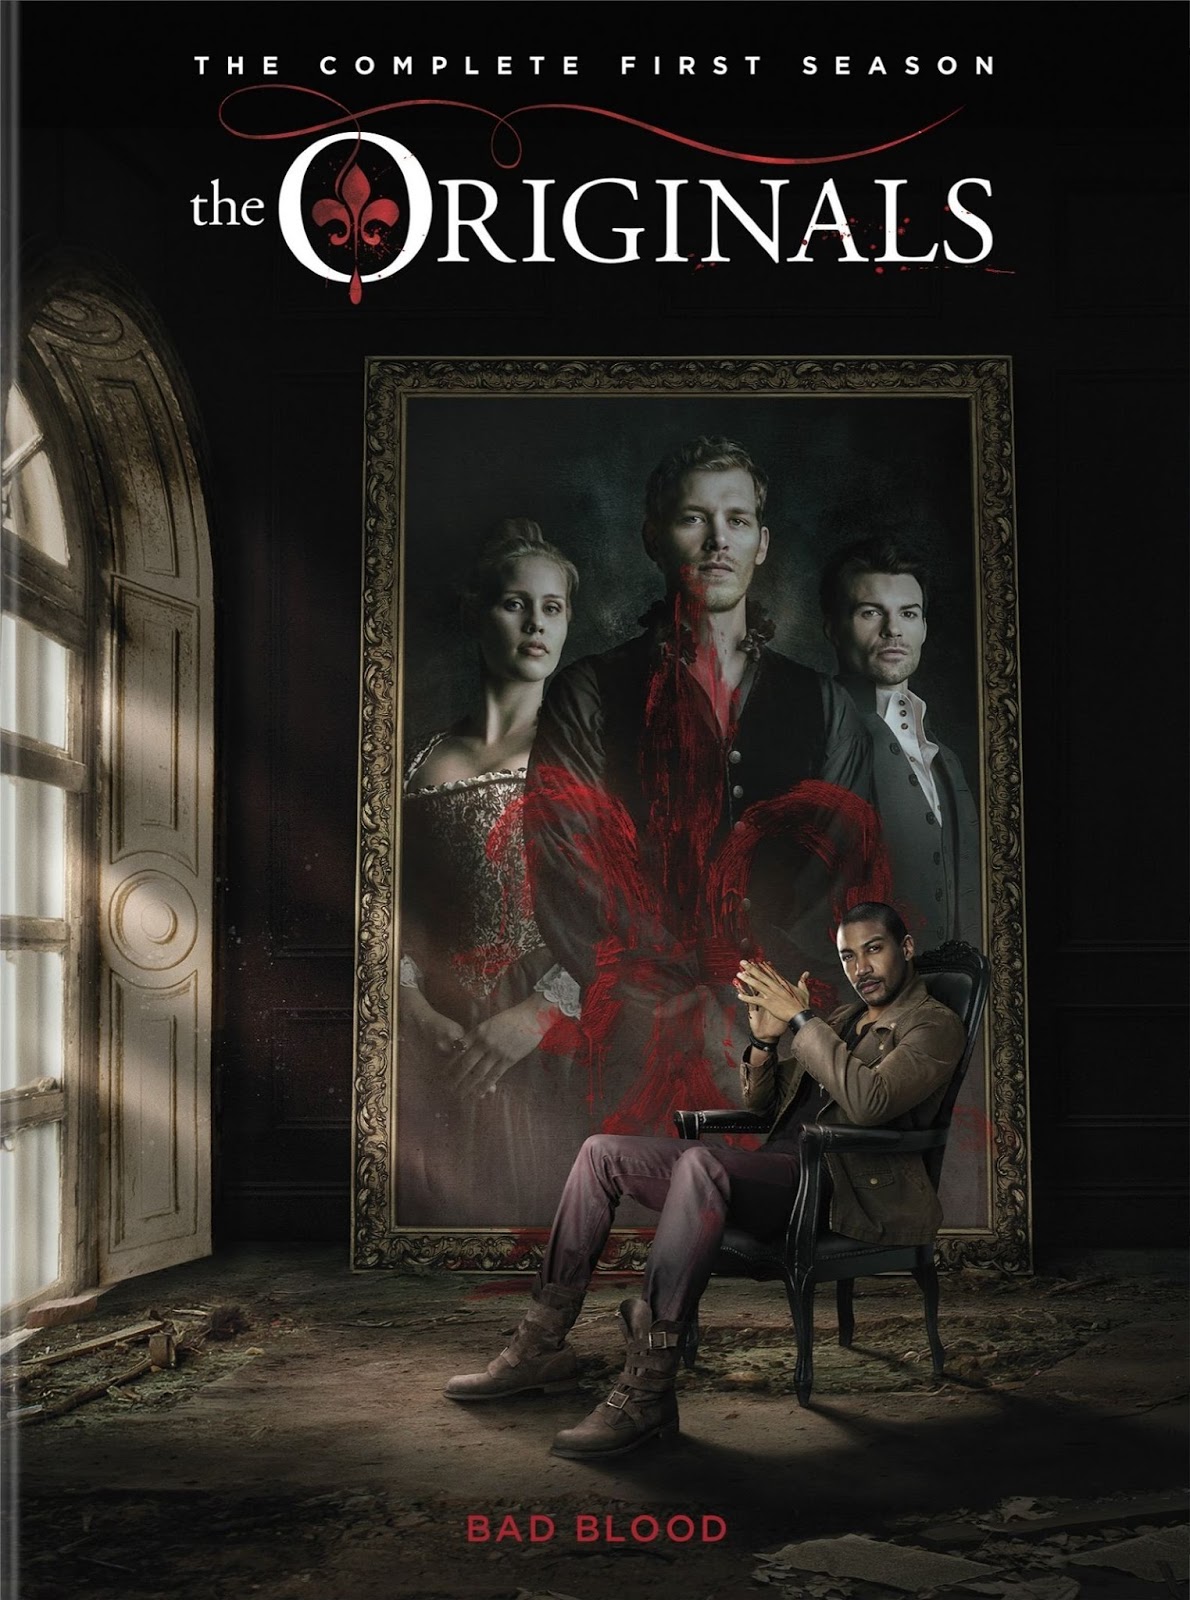 The Originals 2013: Season 1